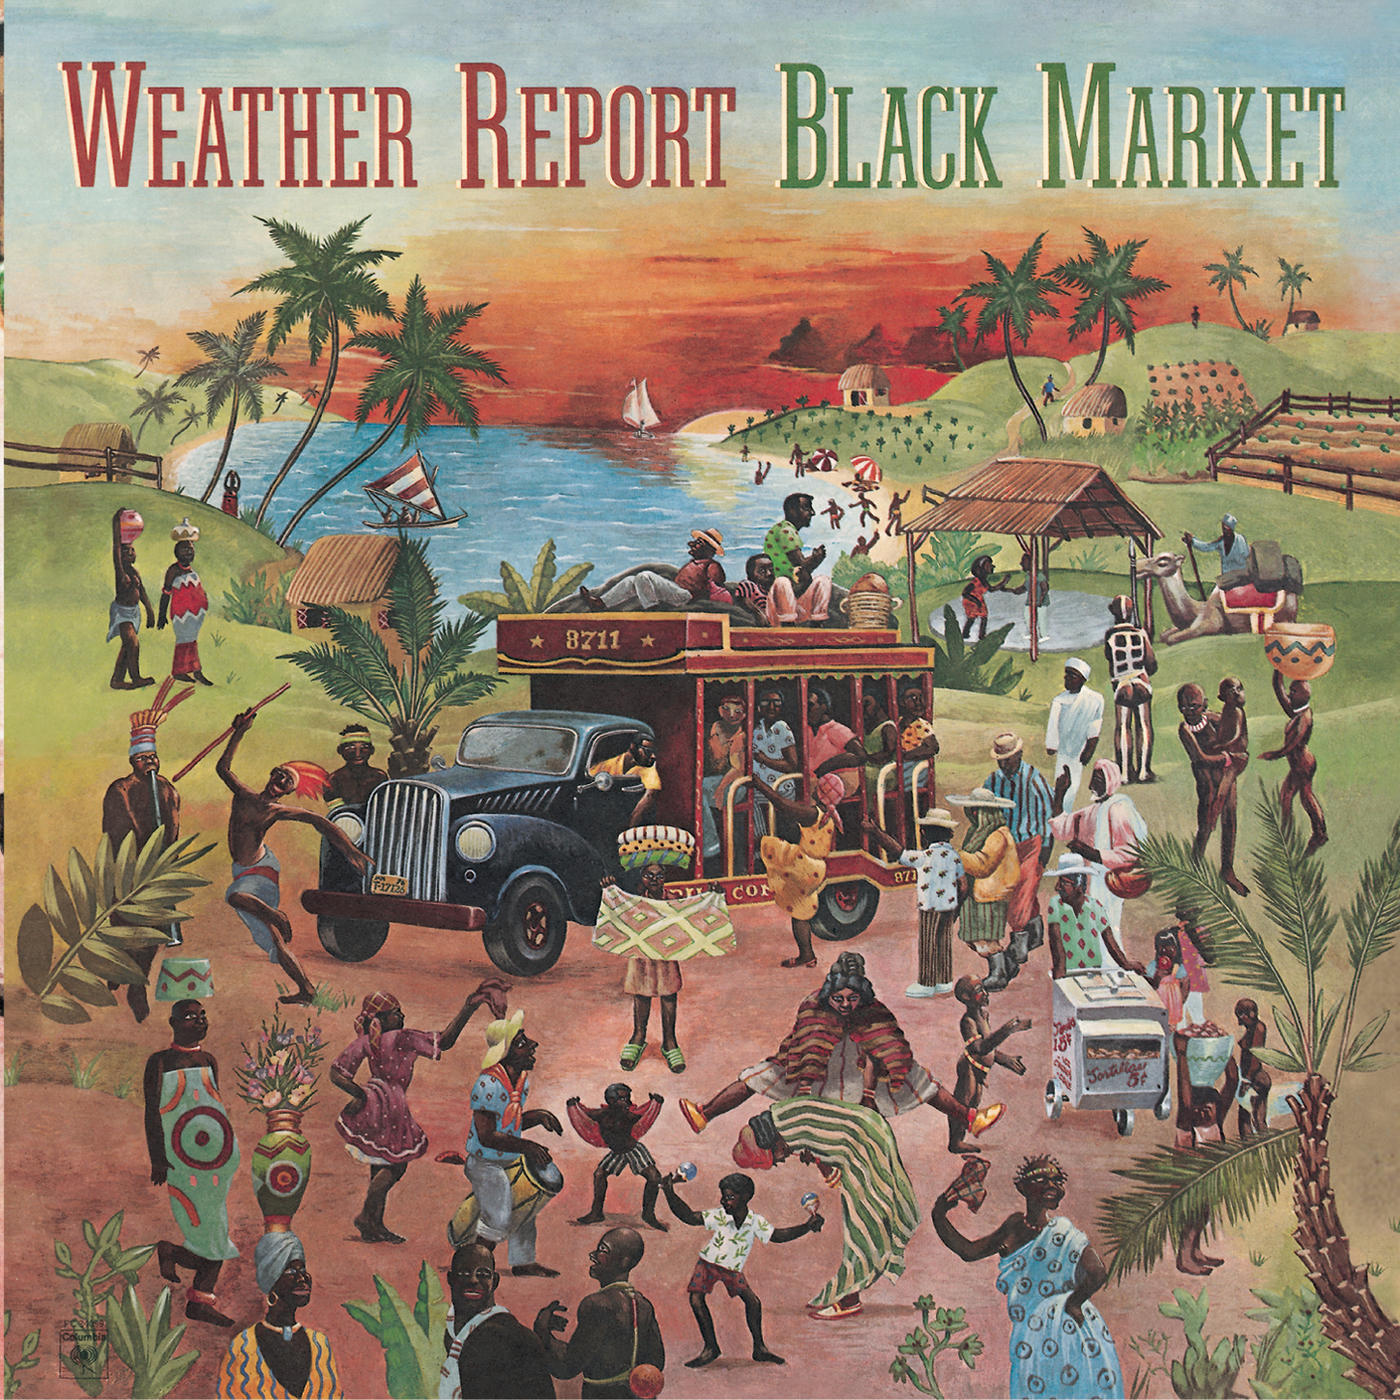 Black Market Website